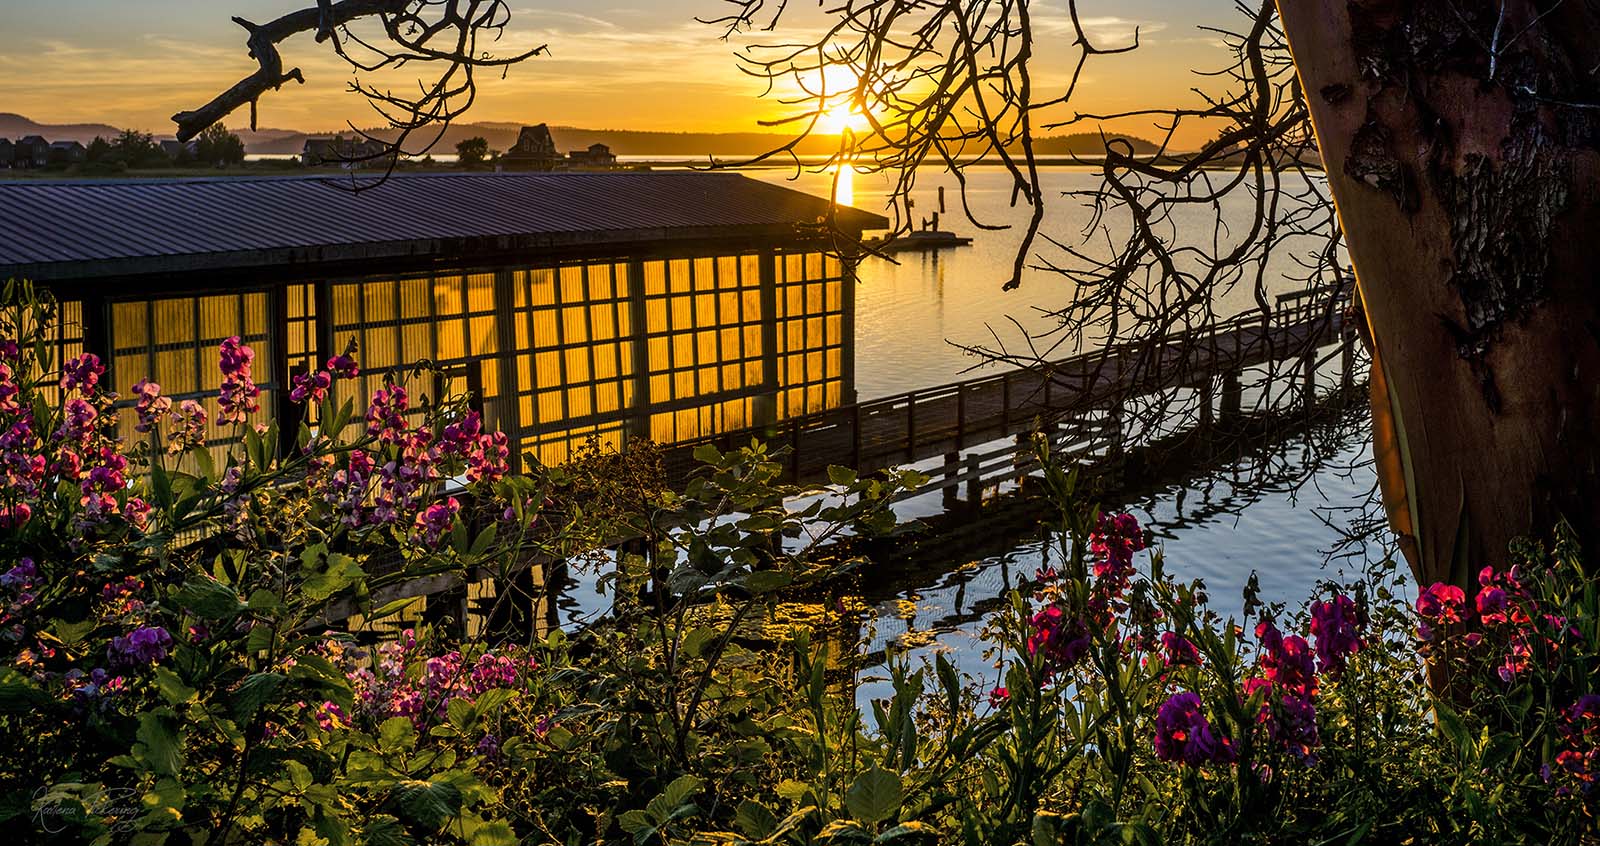 lopez island sunset boat house fisherman bay